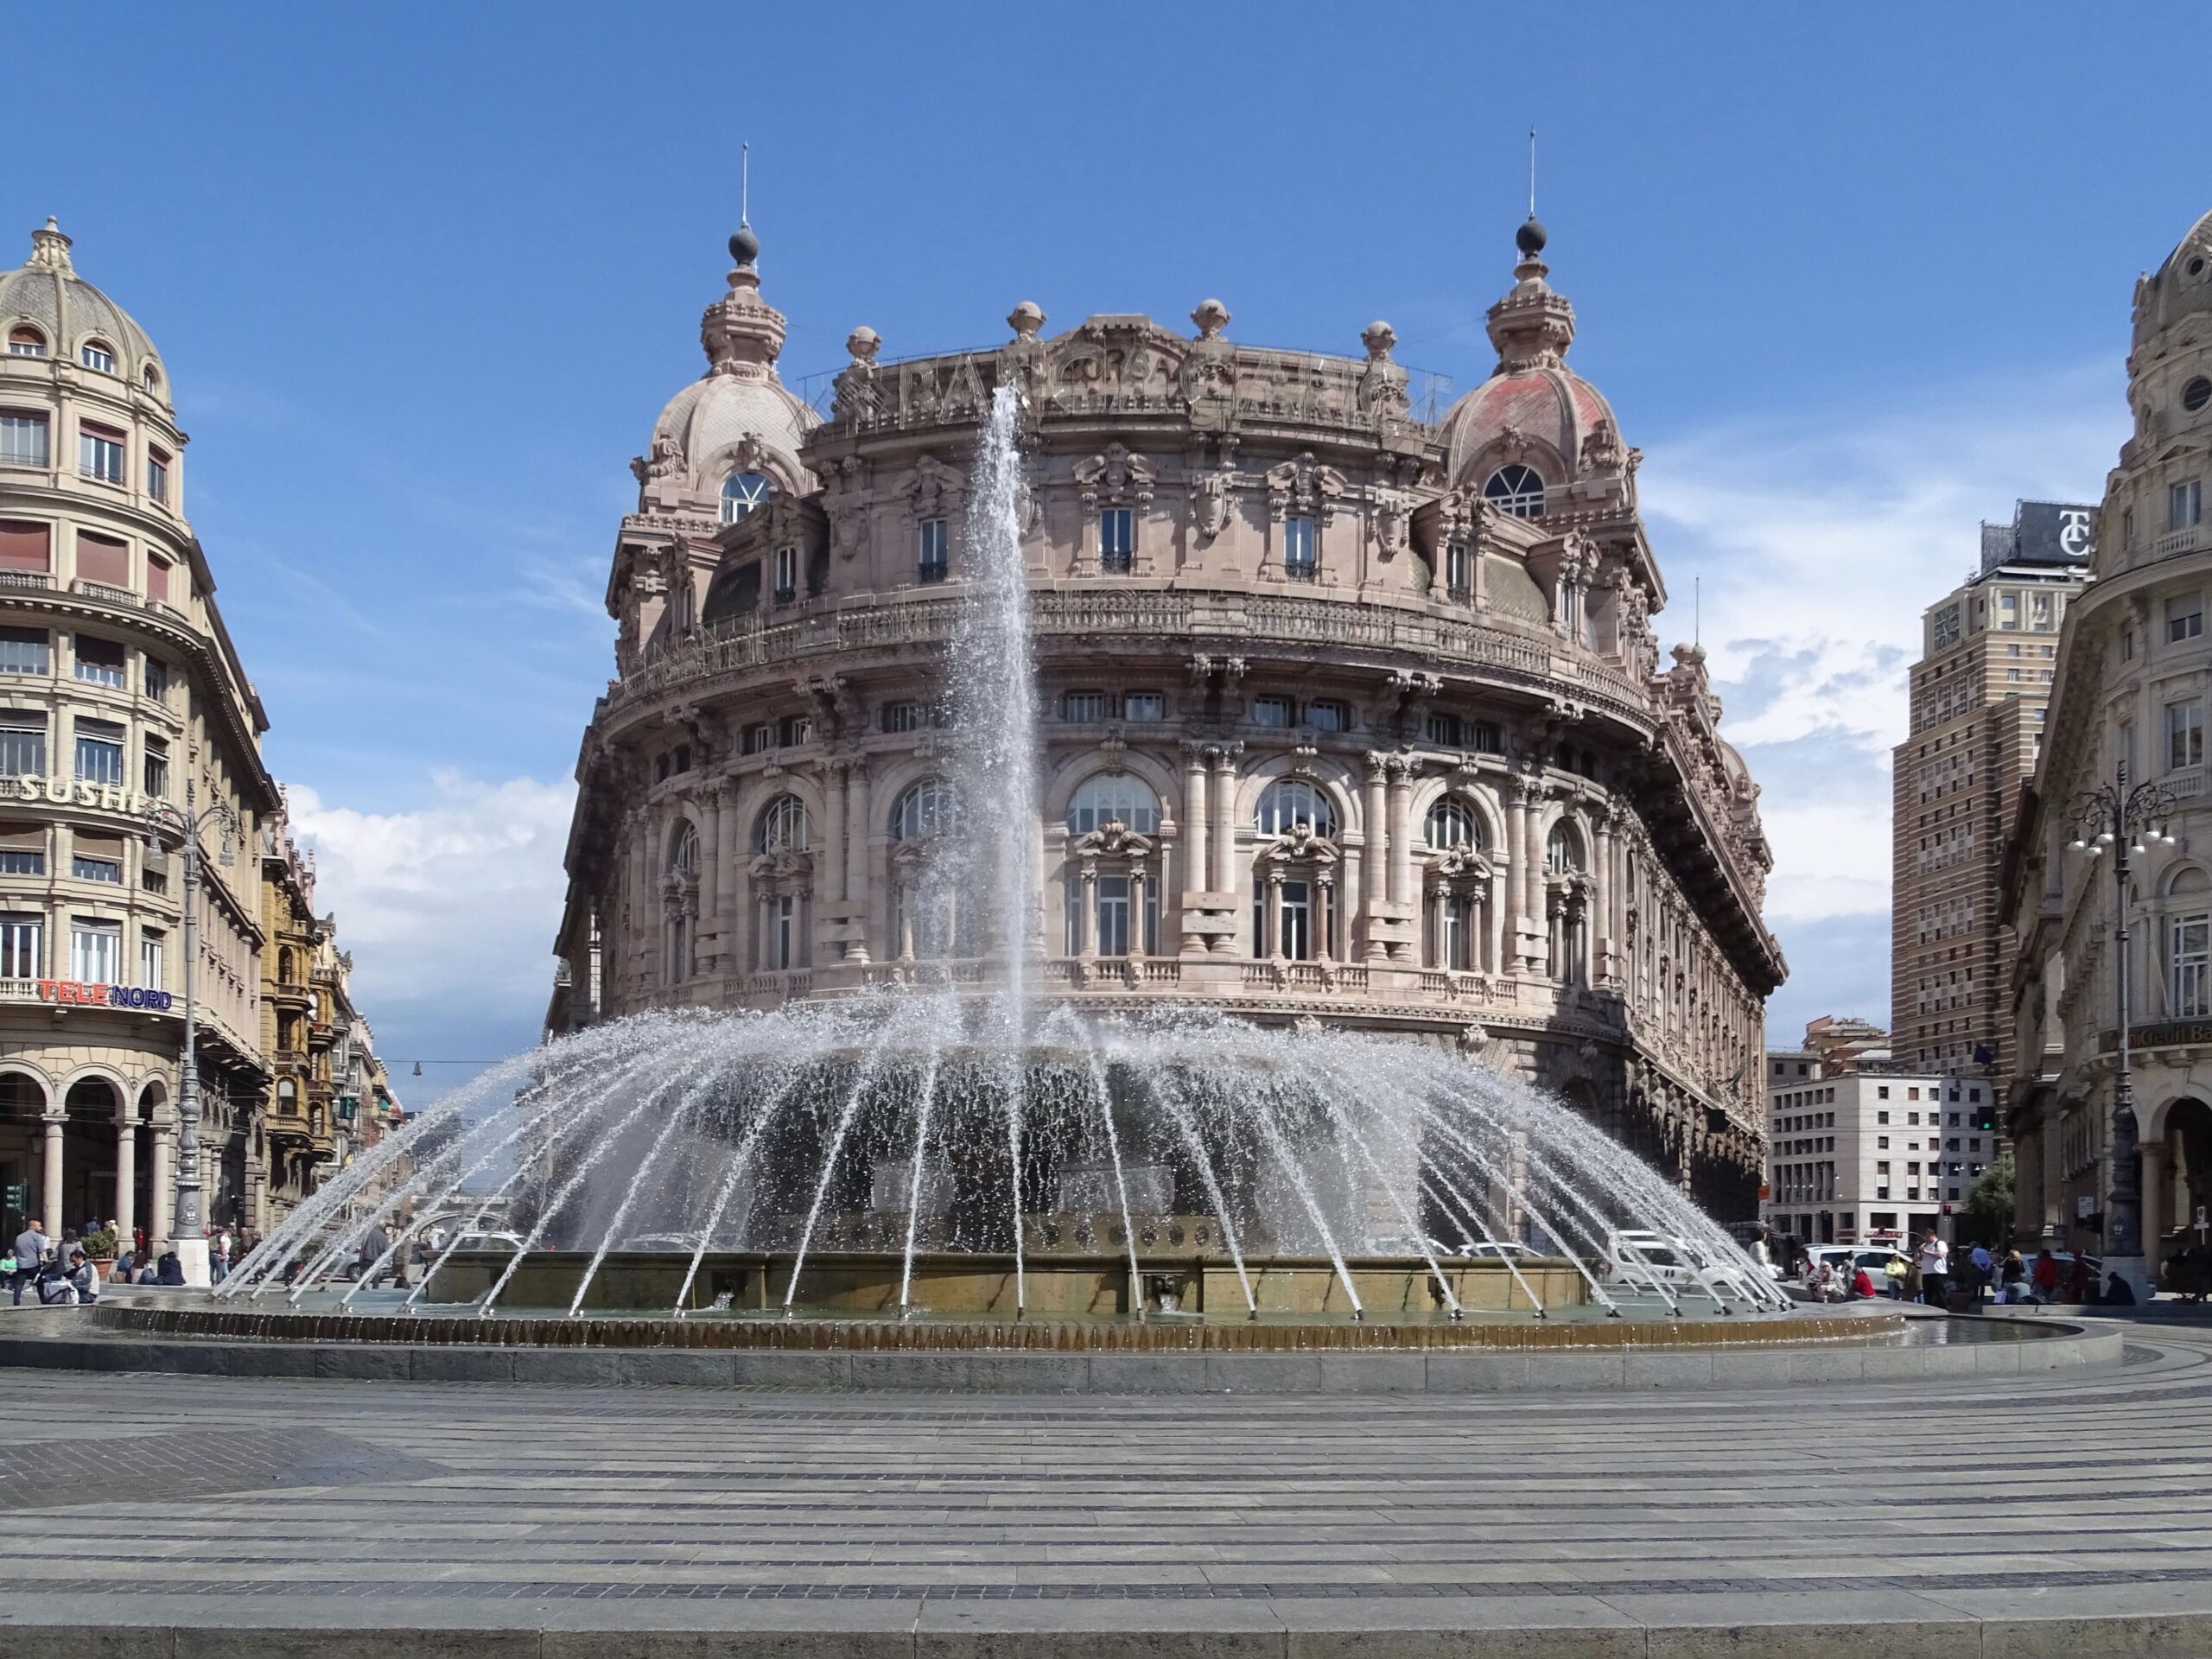 Genoa fountain